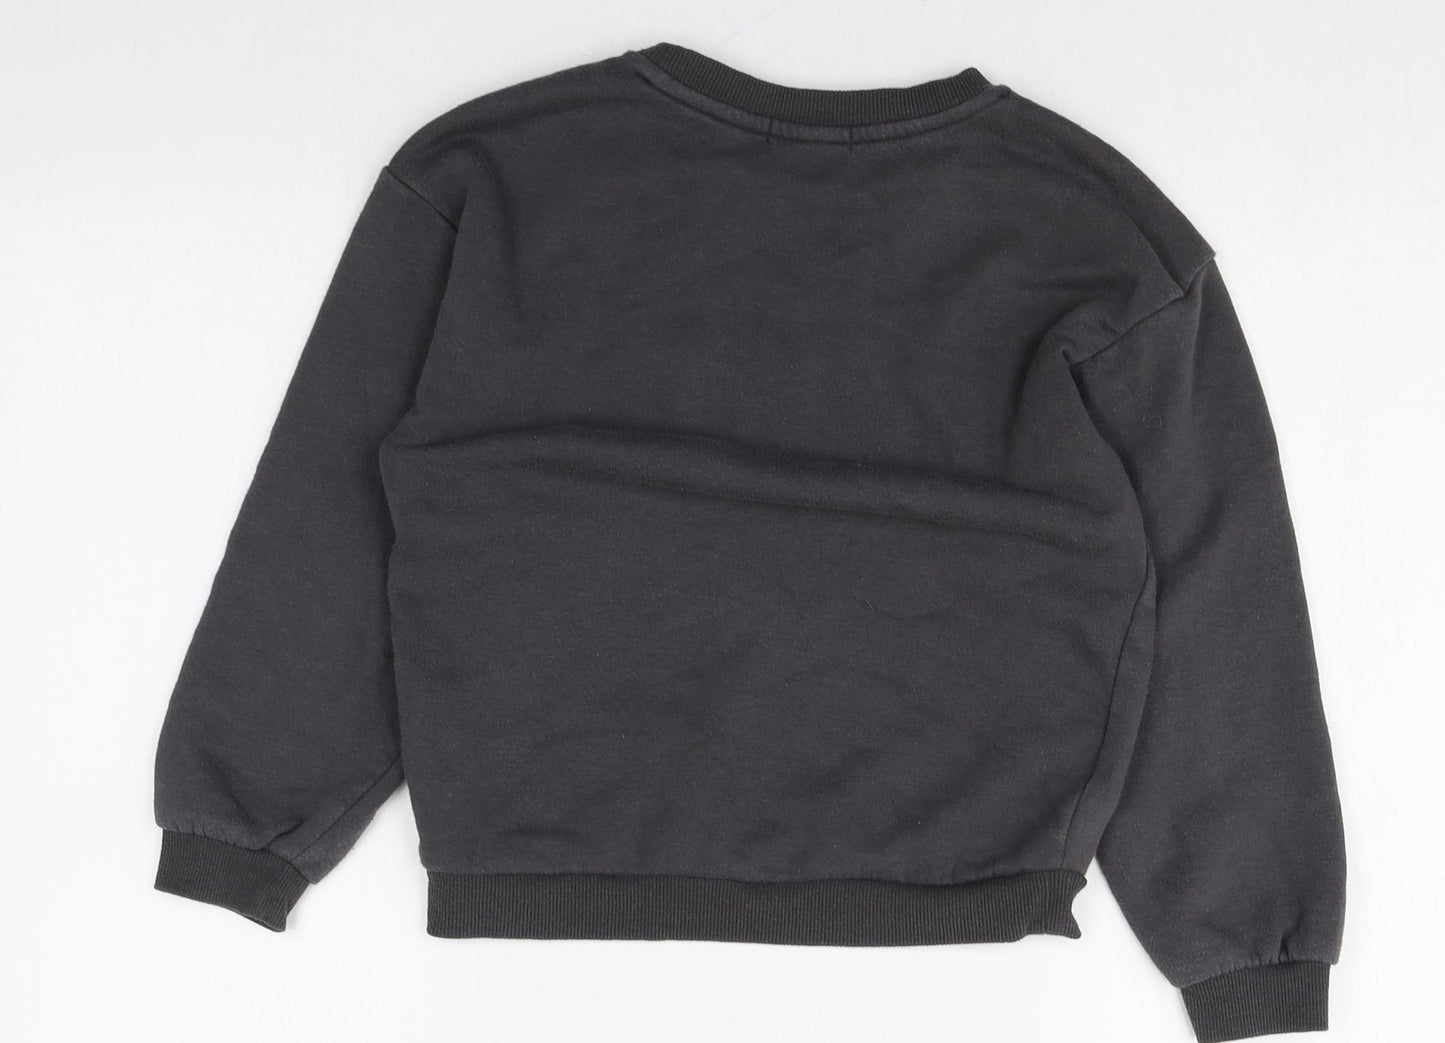 Primark Girls Grey Cotton Pullover Sweatshirt Size 8-9 Years Pullover - New York Paris London